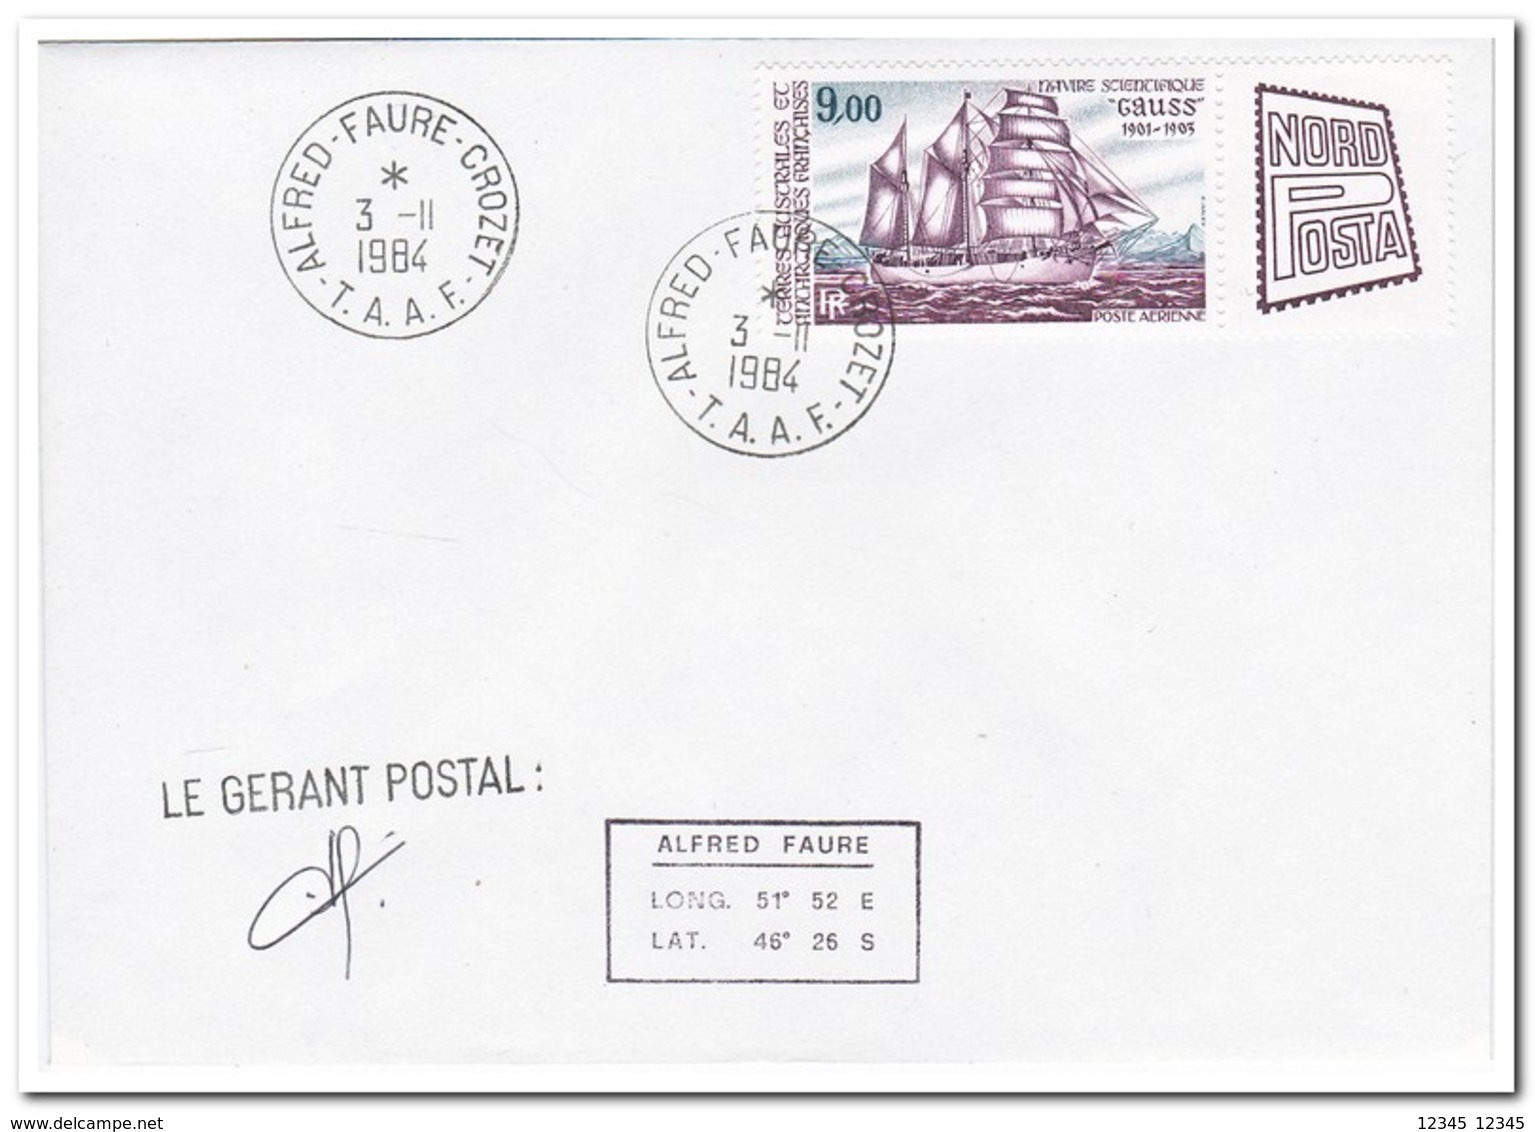 Frans Antarctica 1984, Stamp Exhibition NORDPOSTA, Hamburg ( Signature ) - FDC